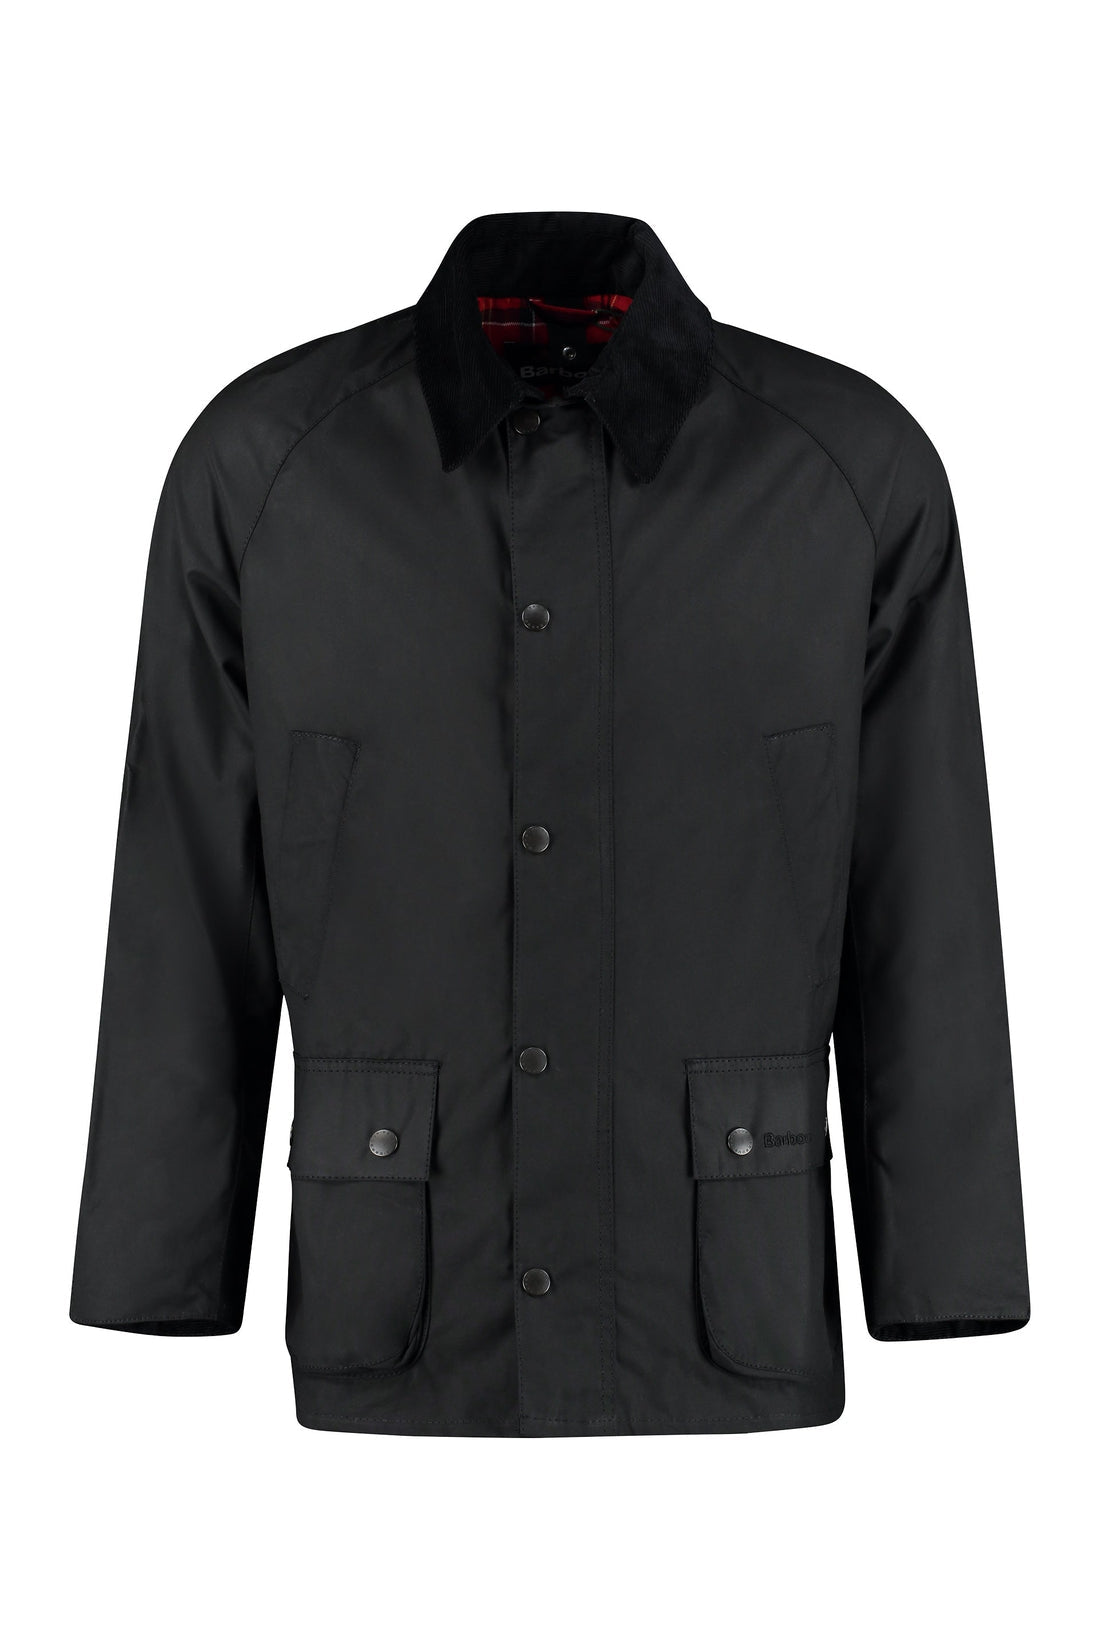 Barbour-OUTLET-SALE-Ashby Wax Zippered cotton jacket-ARCHIVIST